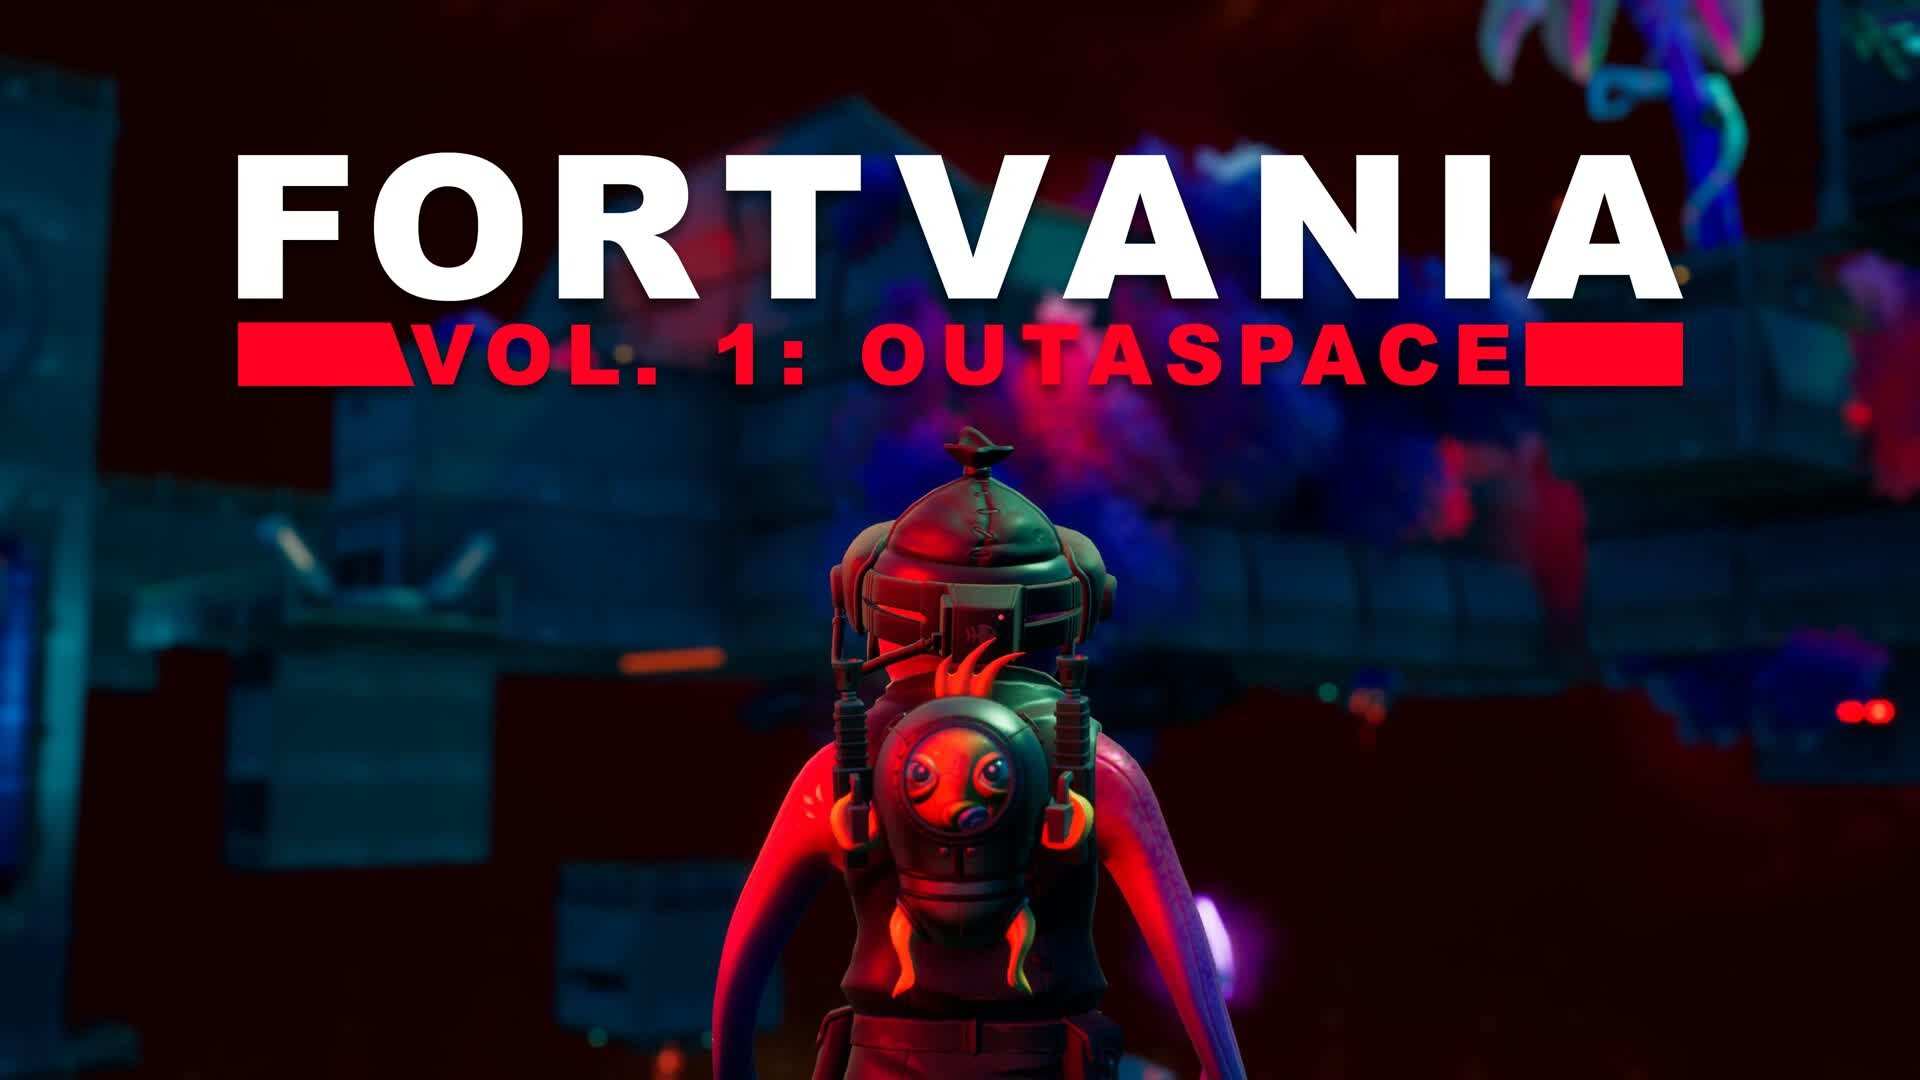 Fortvania I: Outaspace